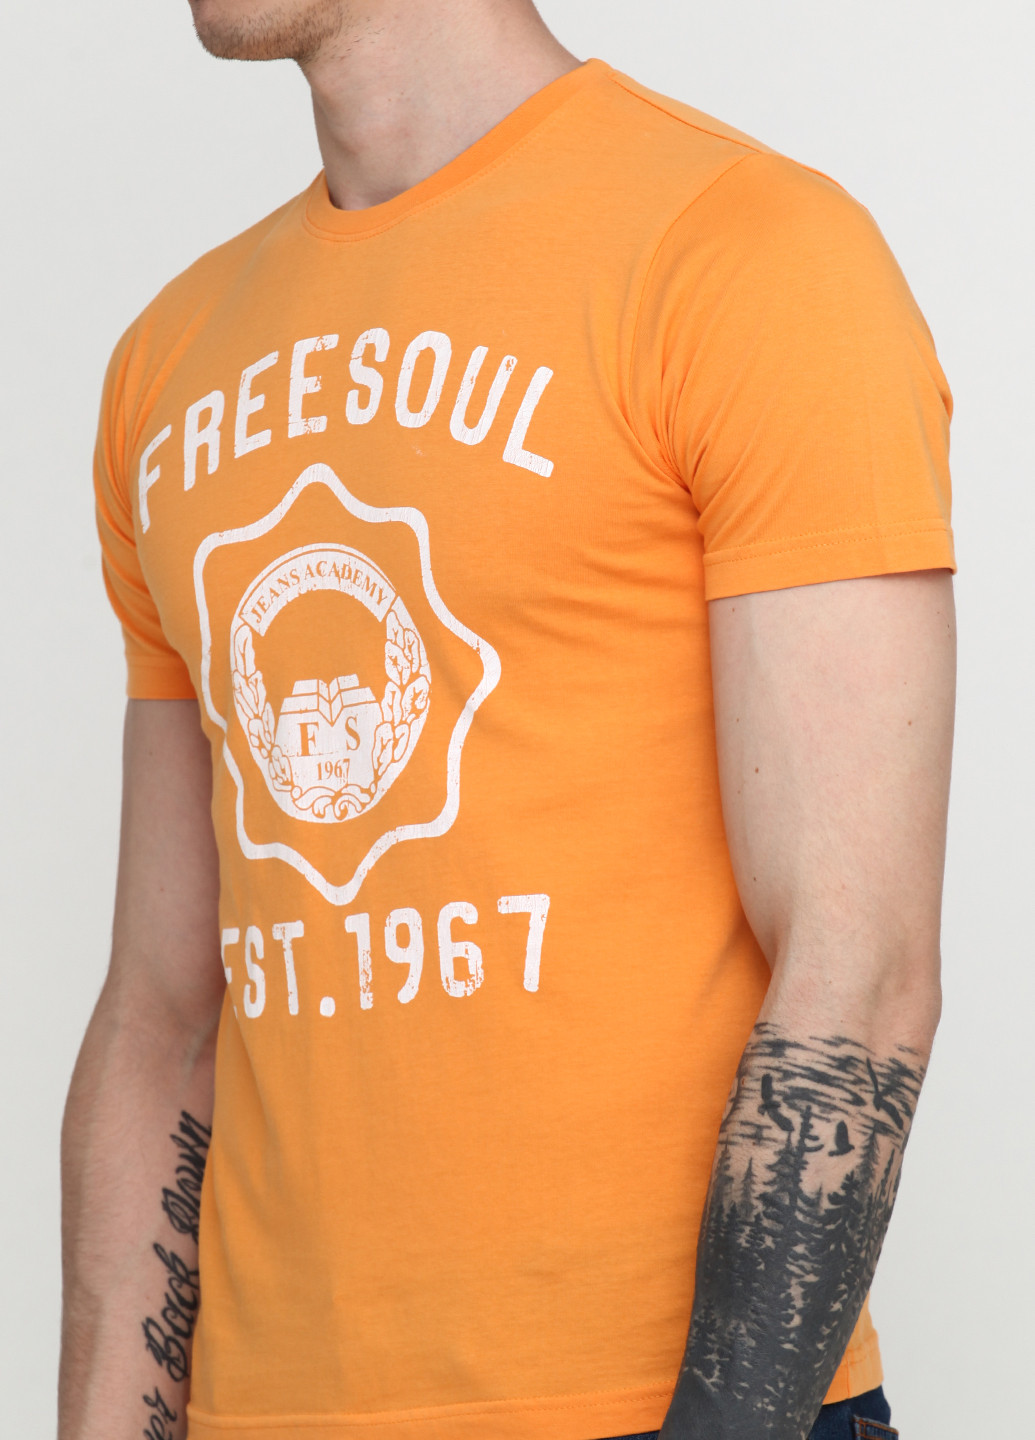 Оранжевая футболка Freesoul